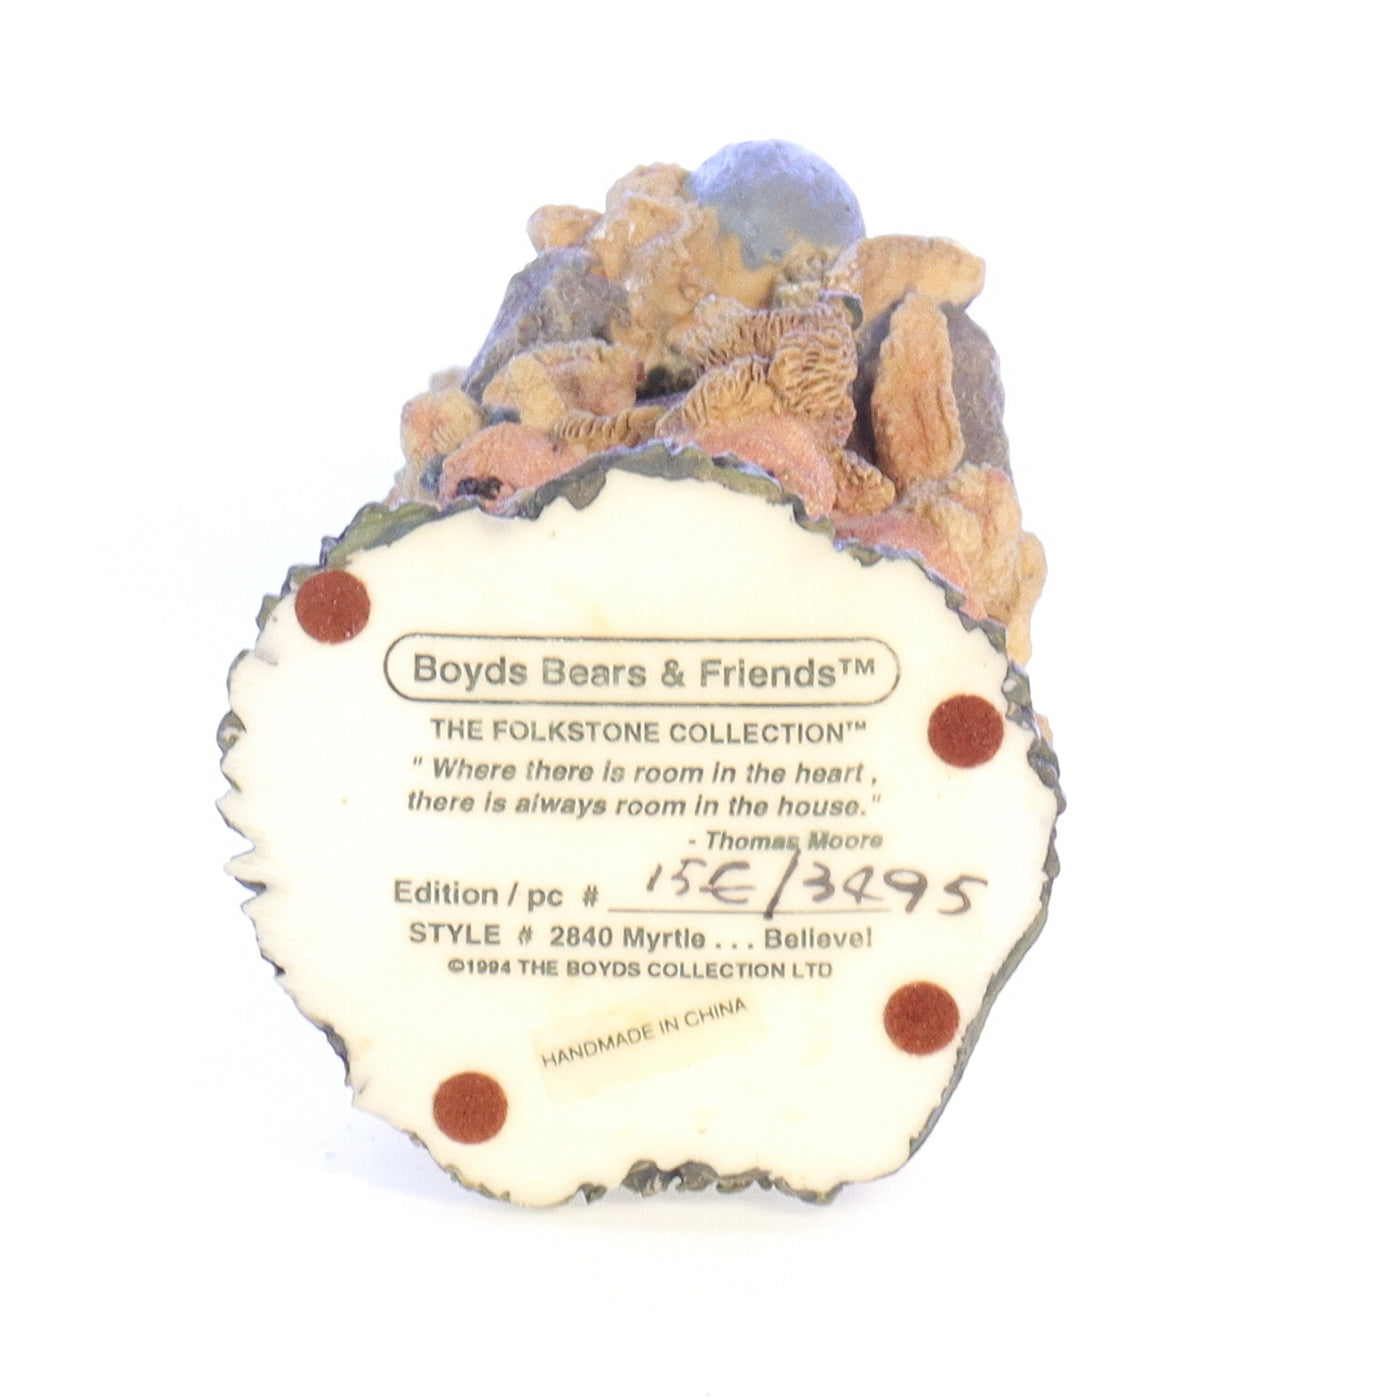 Boyds Bears Resin Figurine in Box Easter 2840 Myrtle ... Believe! 1994 8"